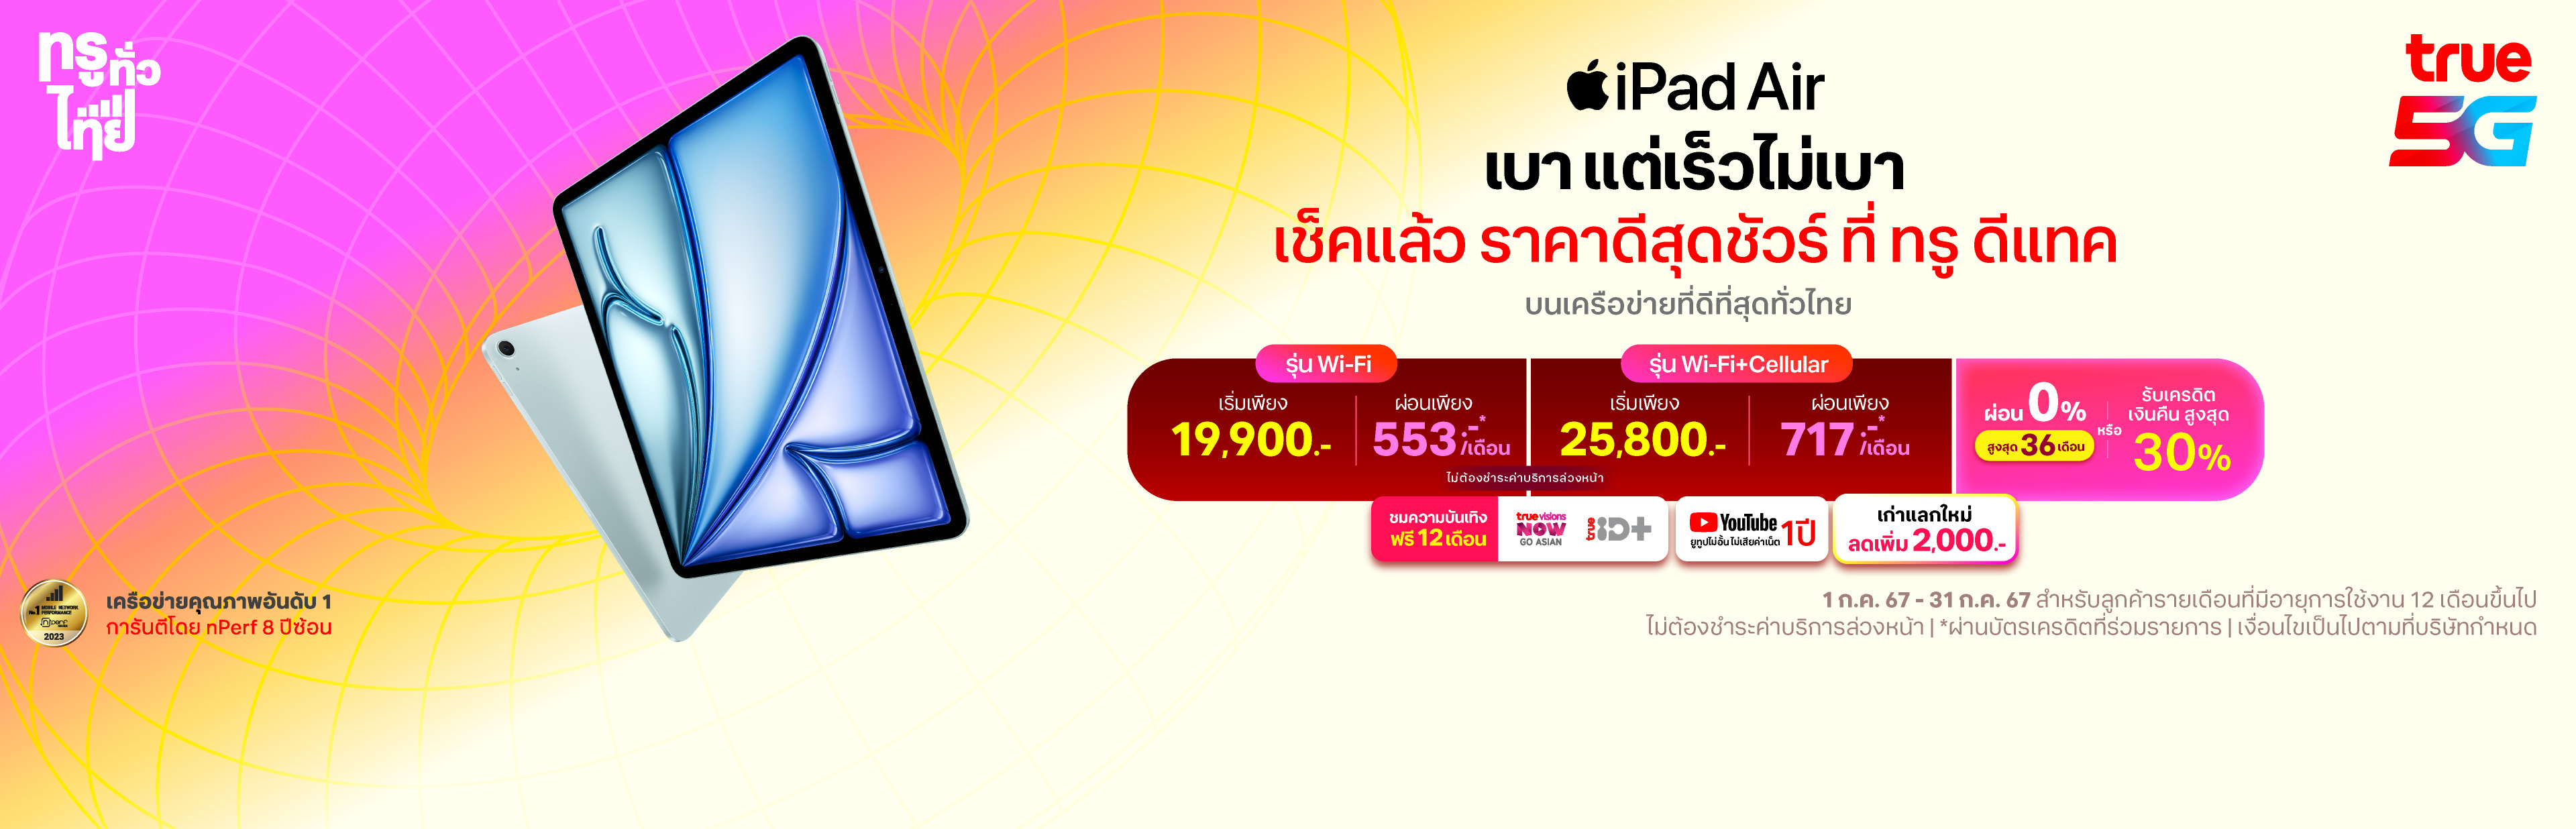 AW-iPad-Air-New-Web-Desktop-3840x1236-TH